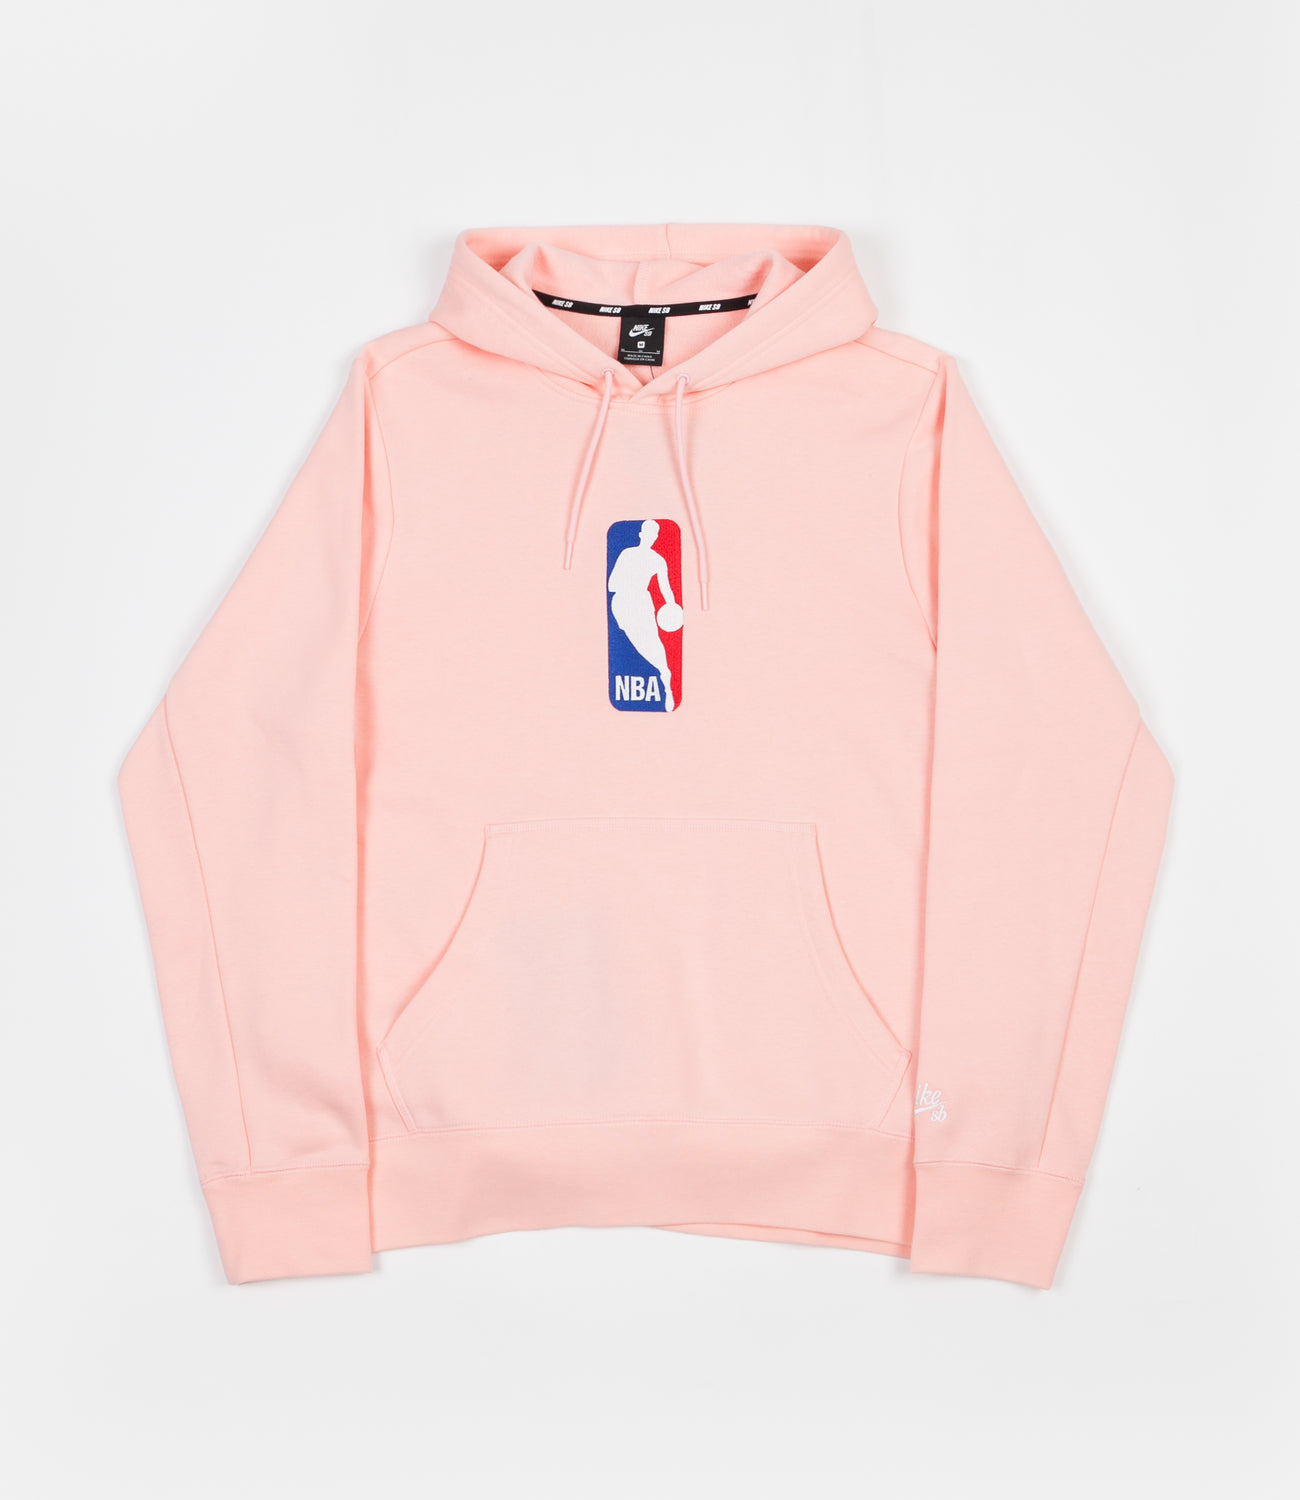 Nike x NBA Icon Hoodie - Storm Pink | Flatspot